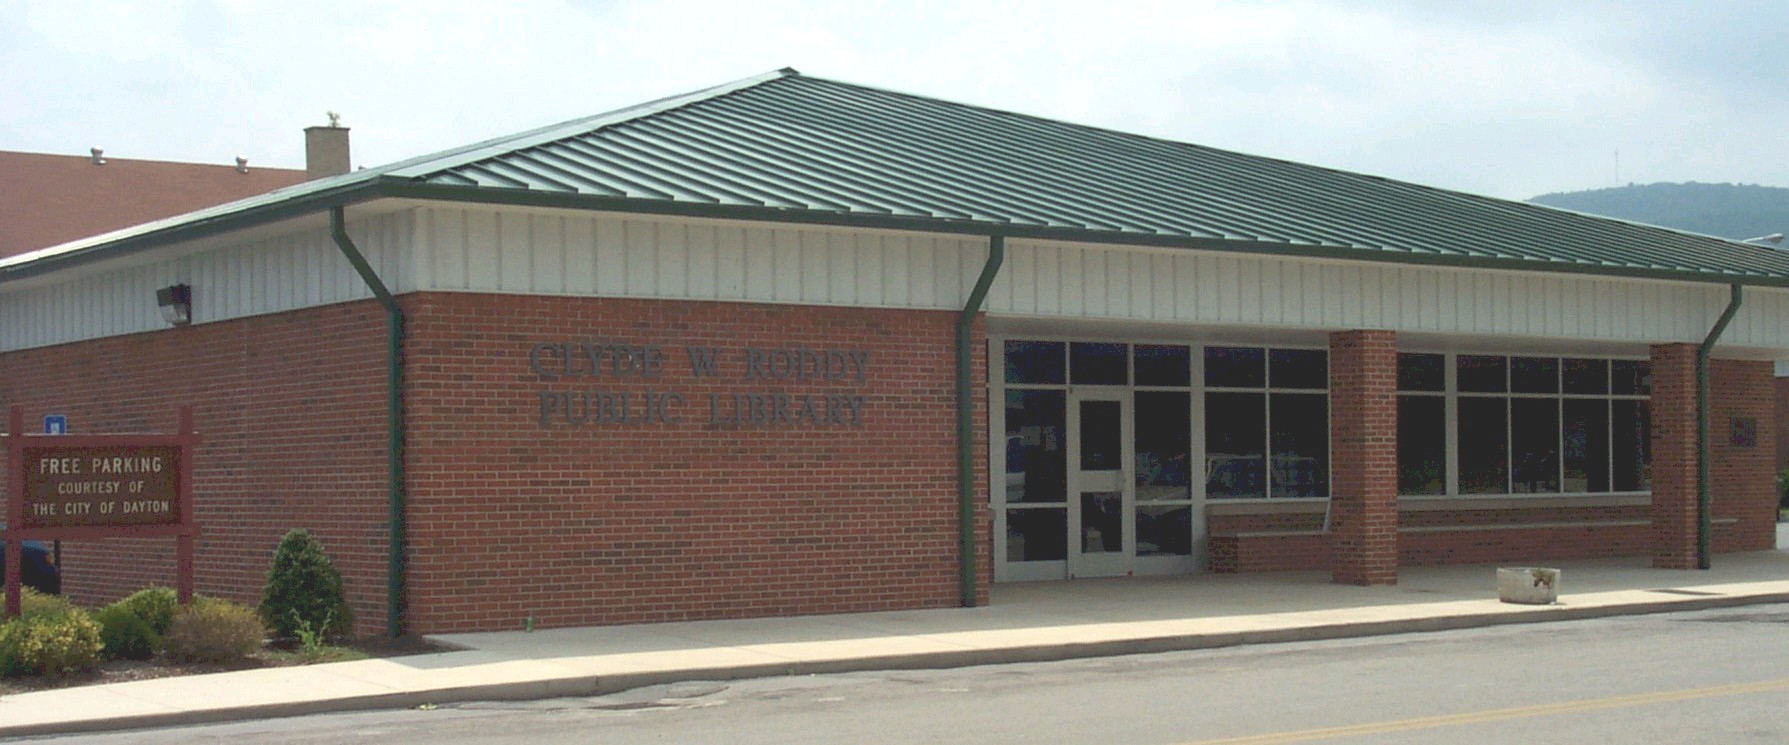 Clyde W. Roddy Public Library